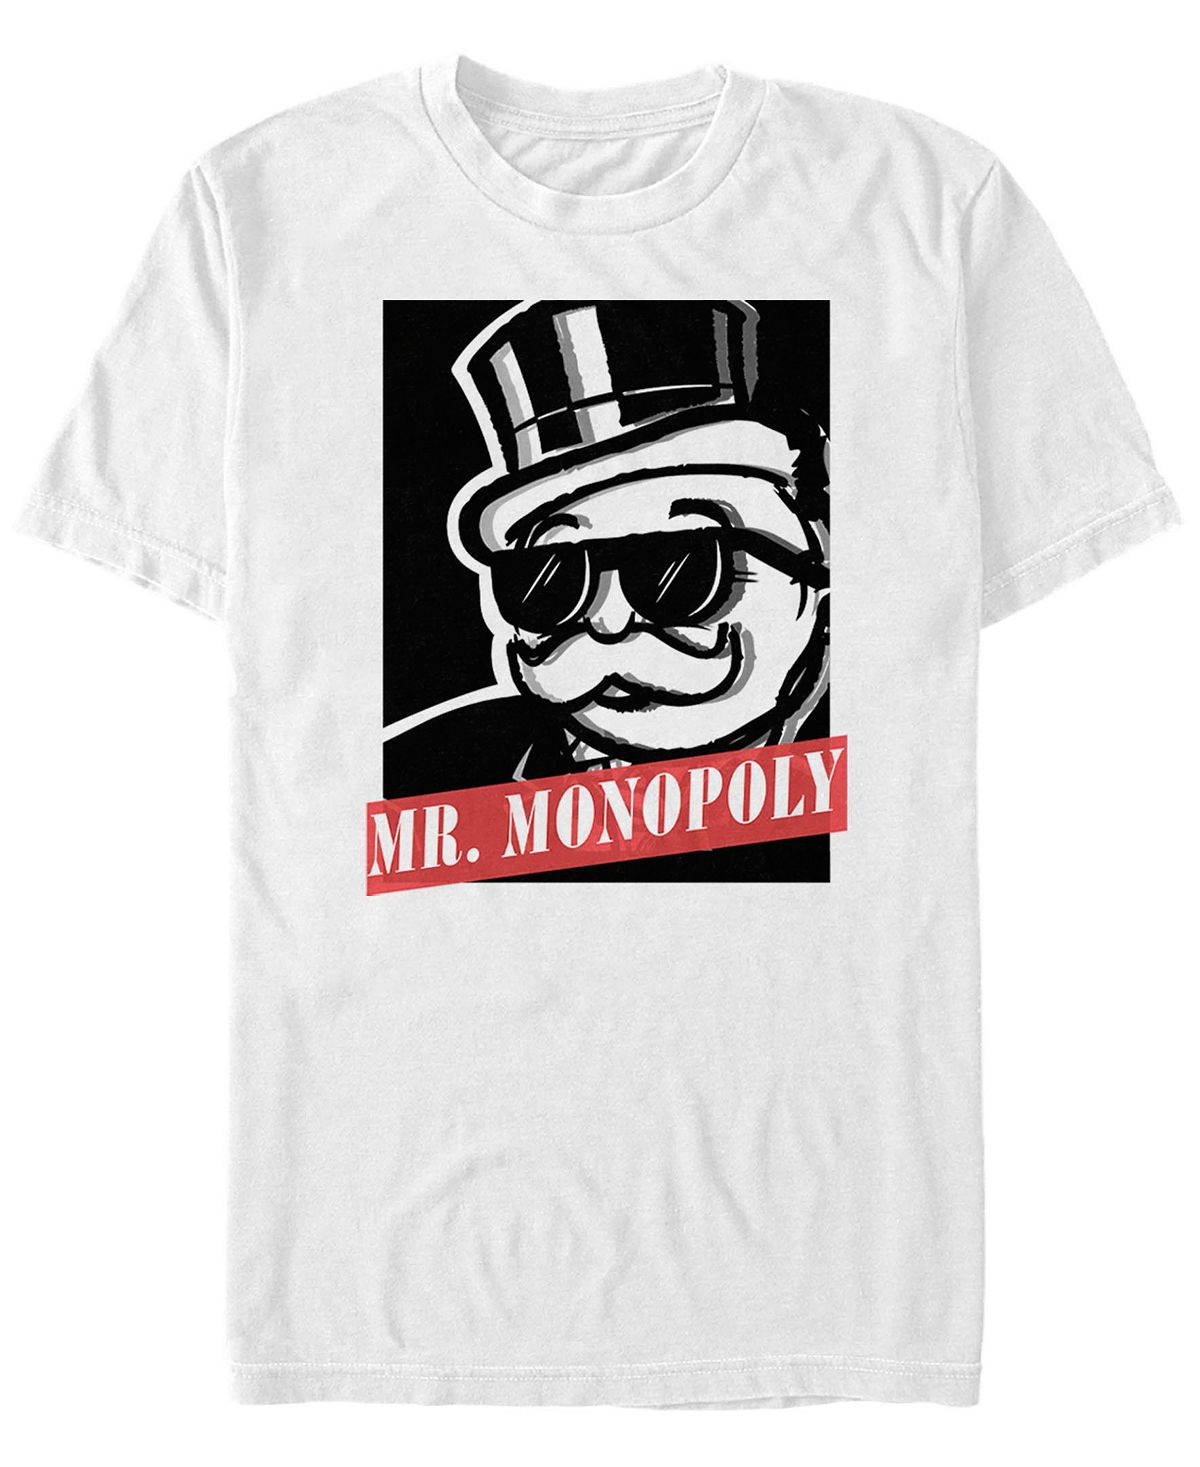 цена Мужская футболка с коротким рукавом mr monopoly с графическим плакатом Fifth Sun, белый